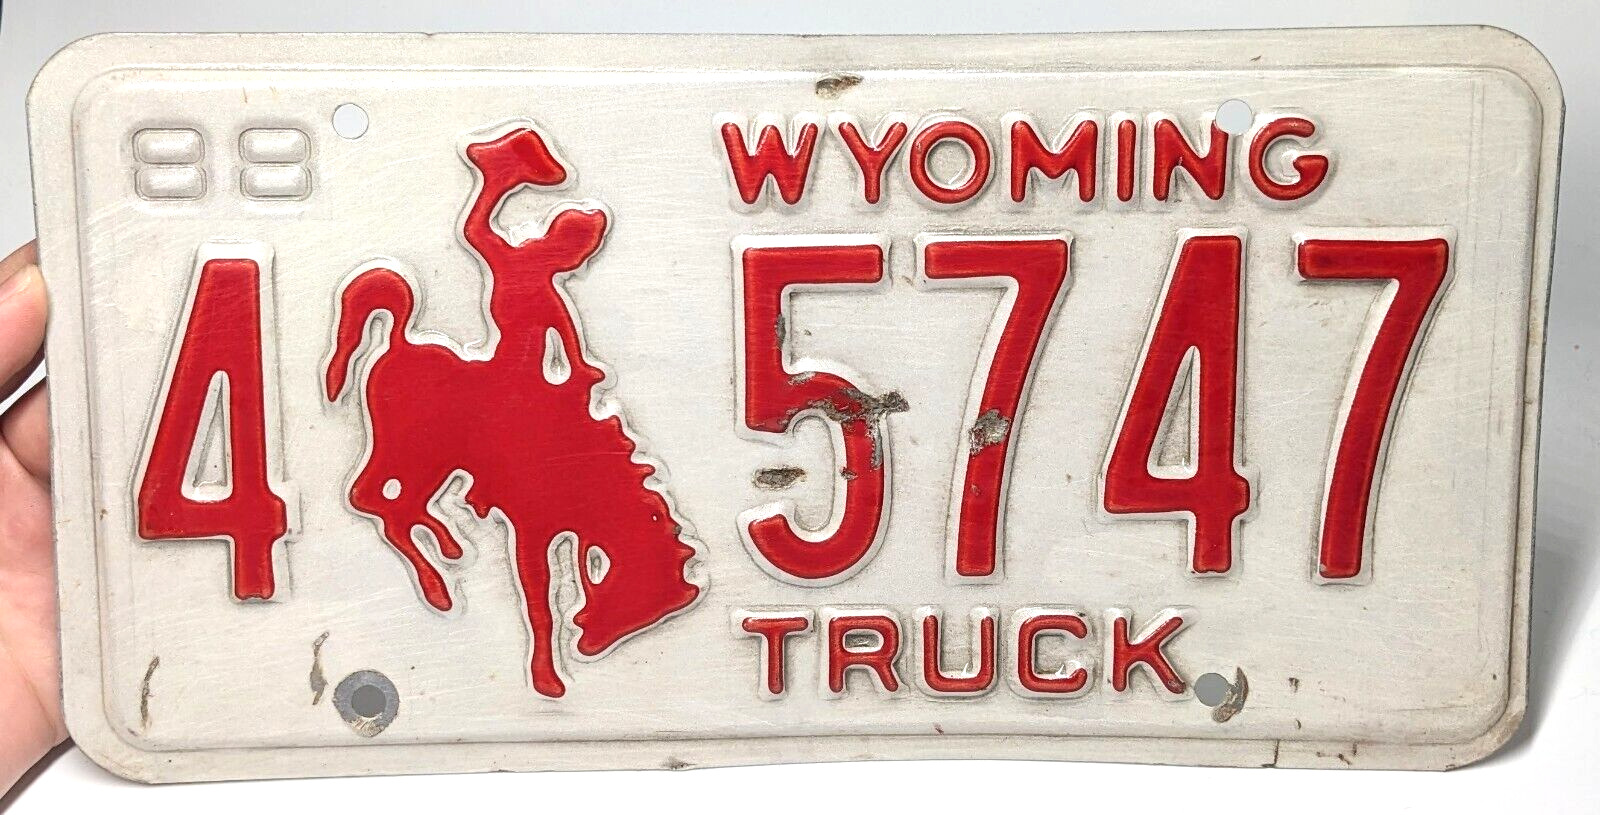 Vintage 1988 Wyoming License Plate for Truck, Cowboy Bronco Design